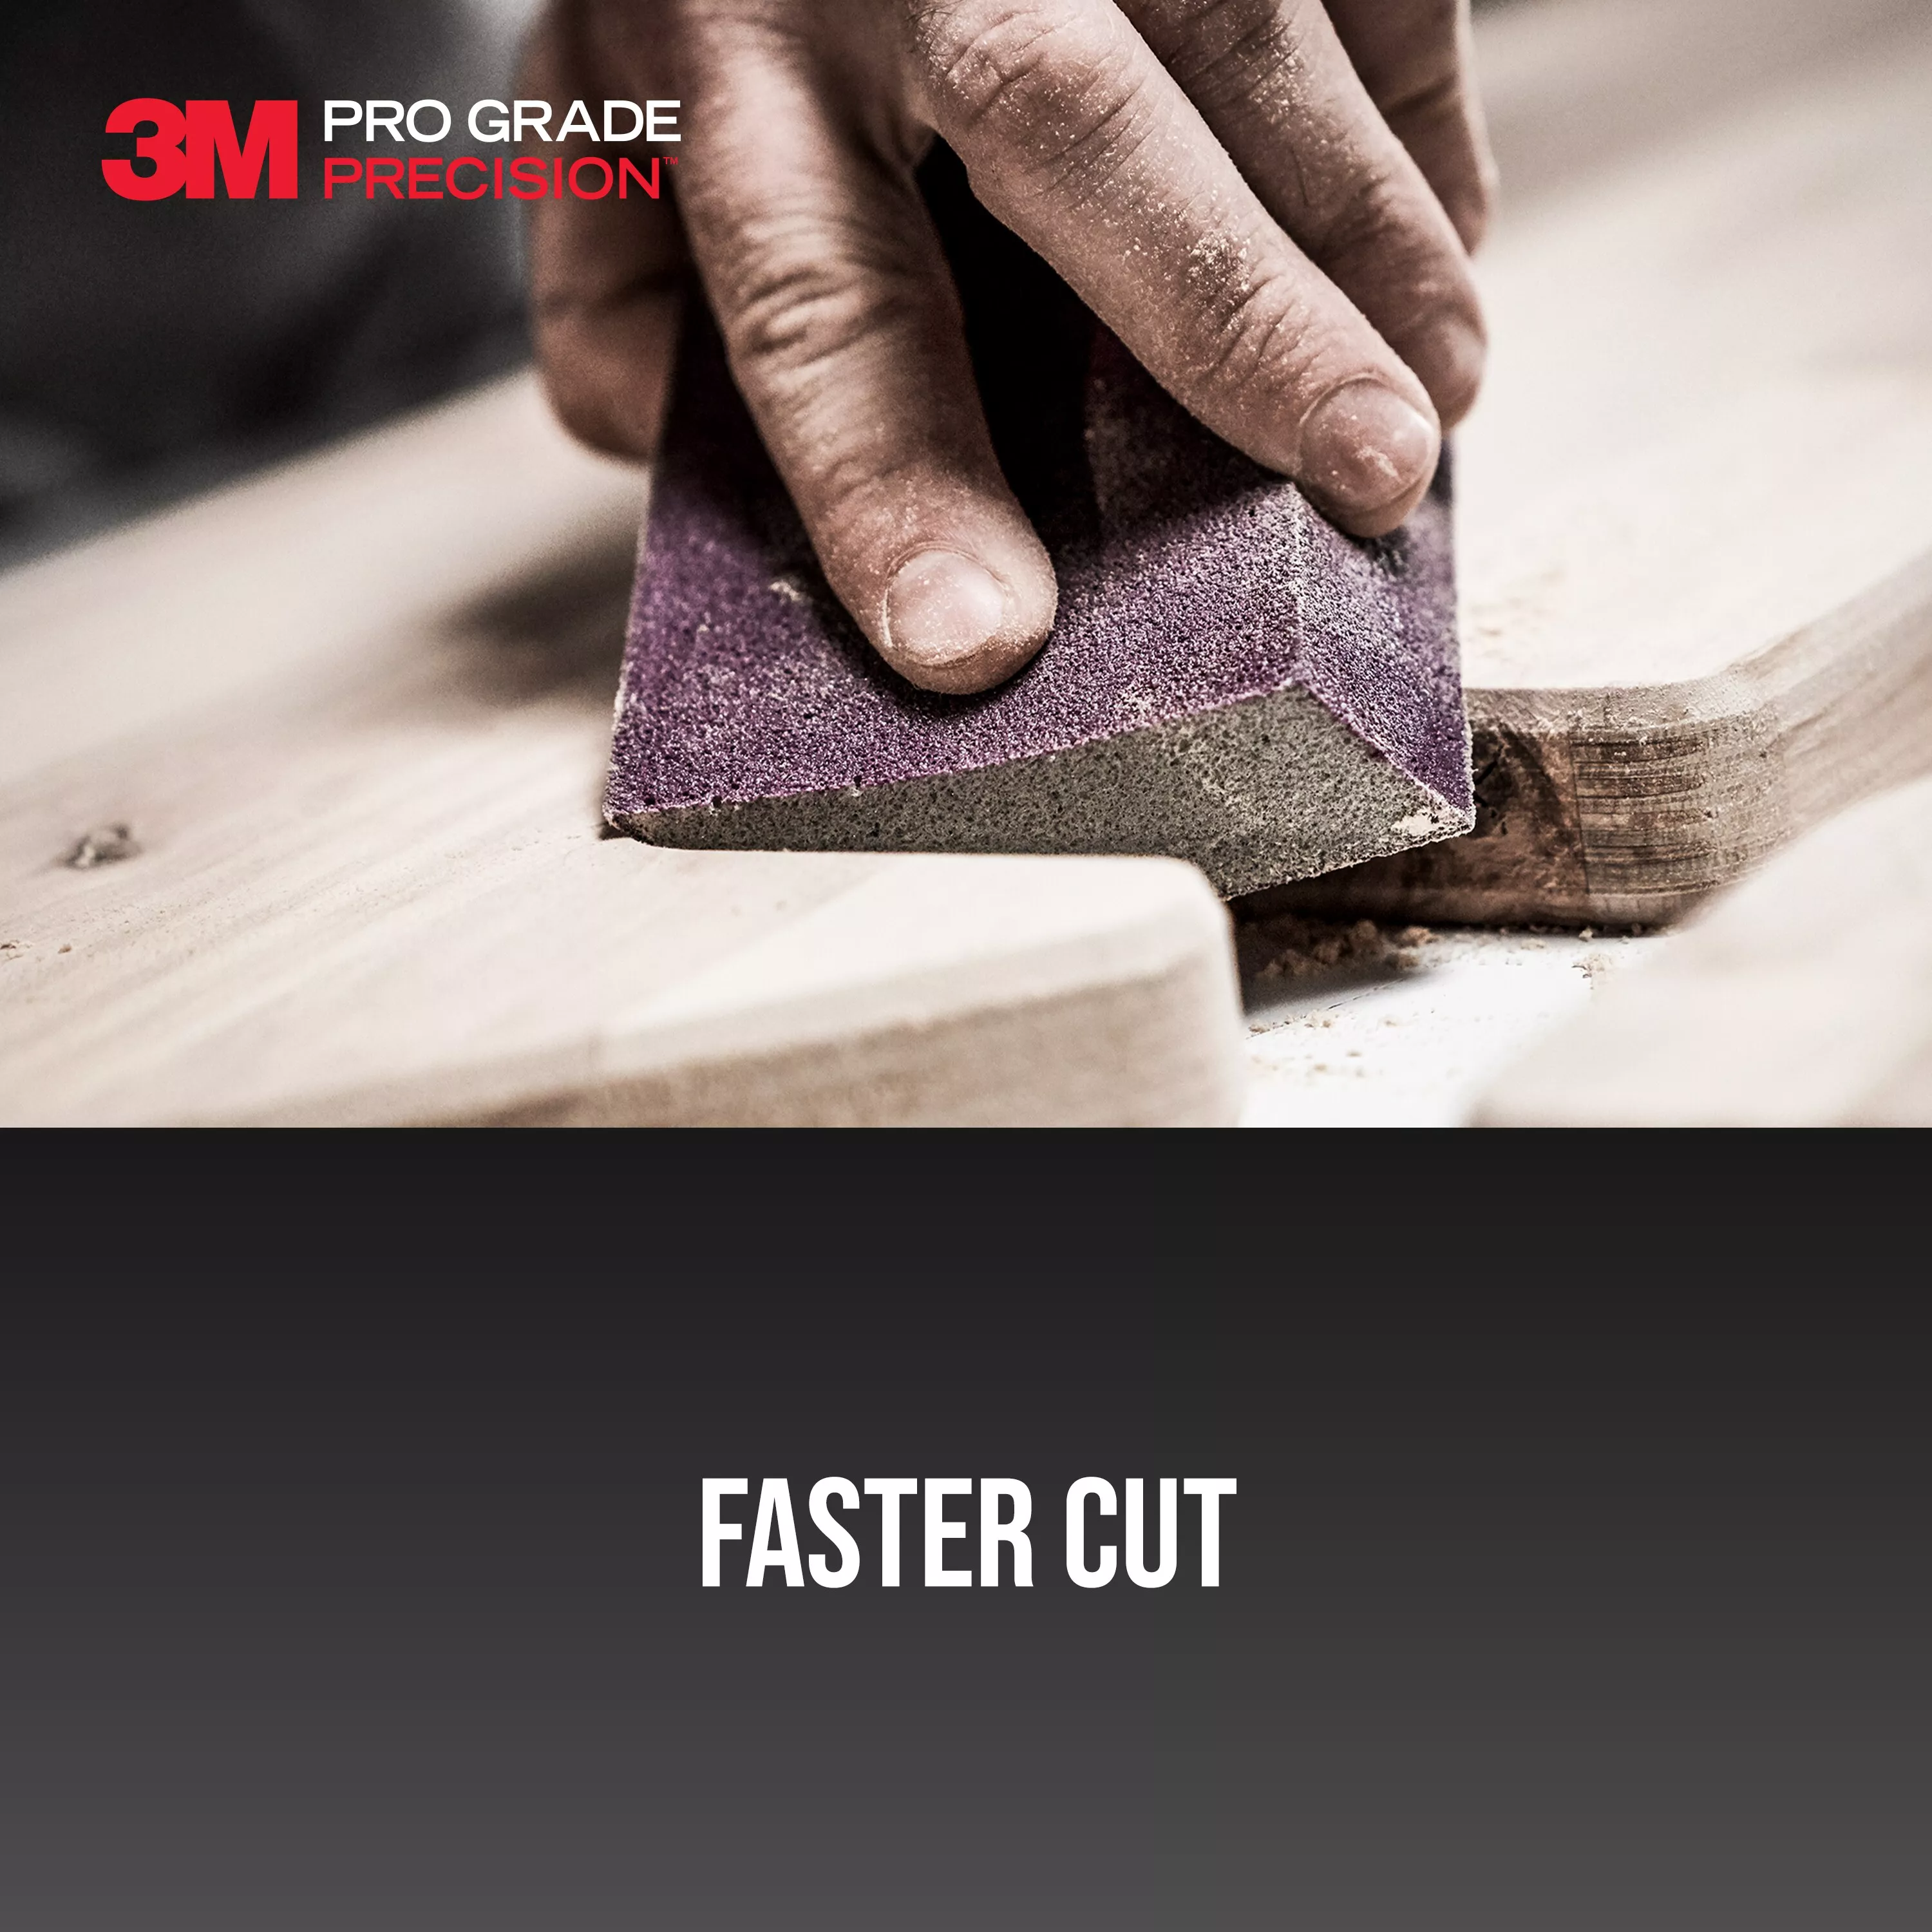 SKU 7100170054 | 3M™ Pro Grade Precision™ Faster Sanding Block Sponge